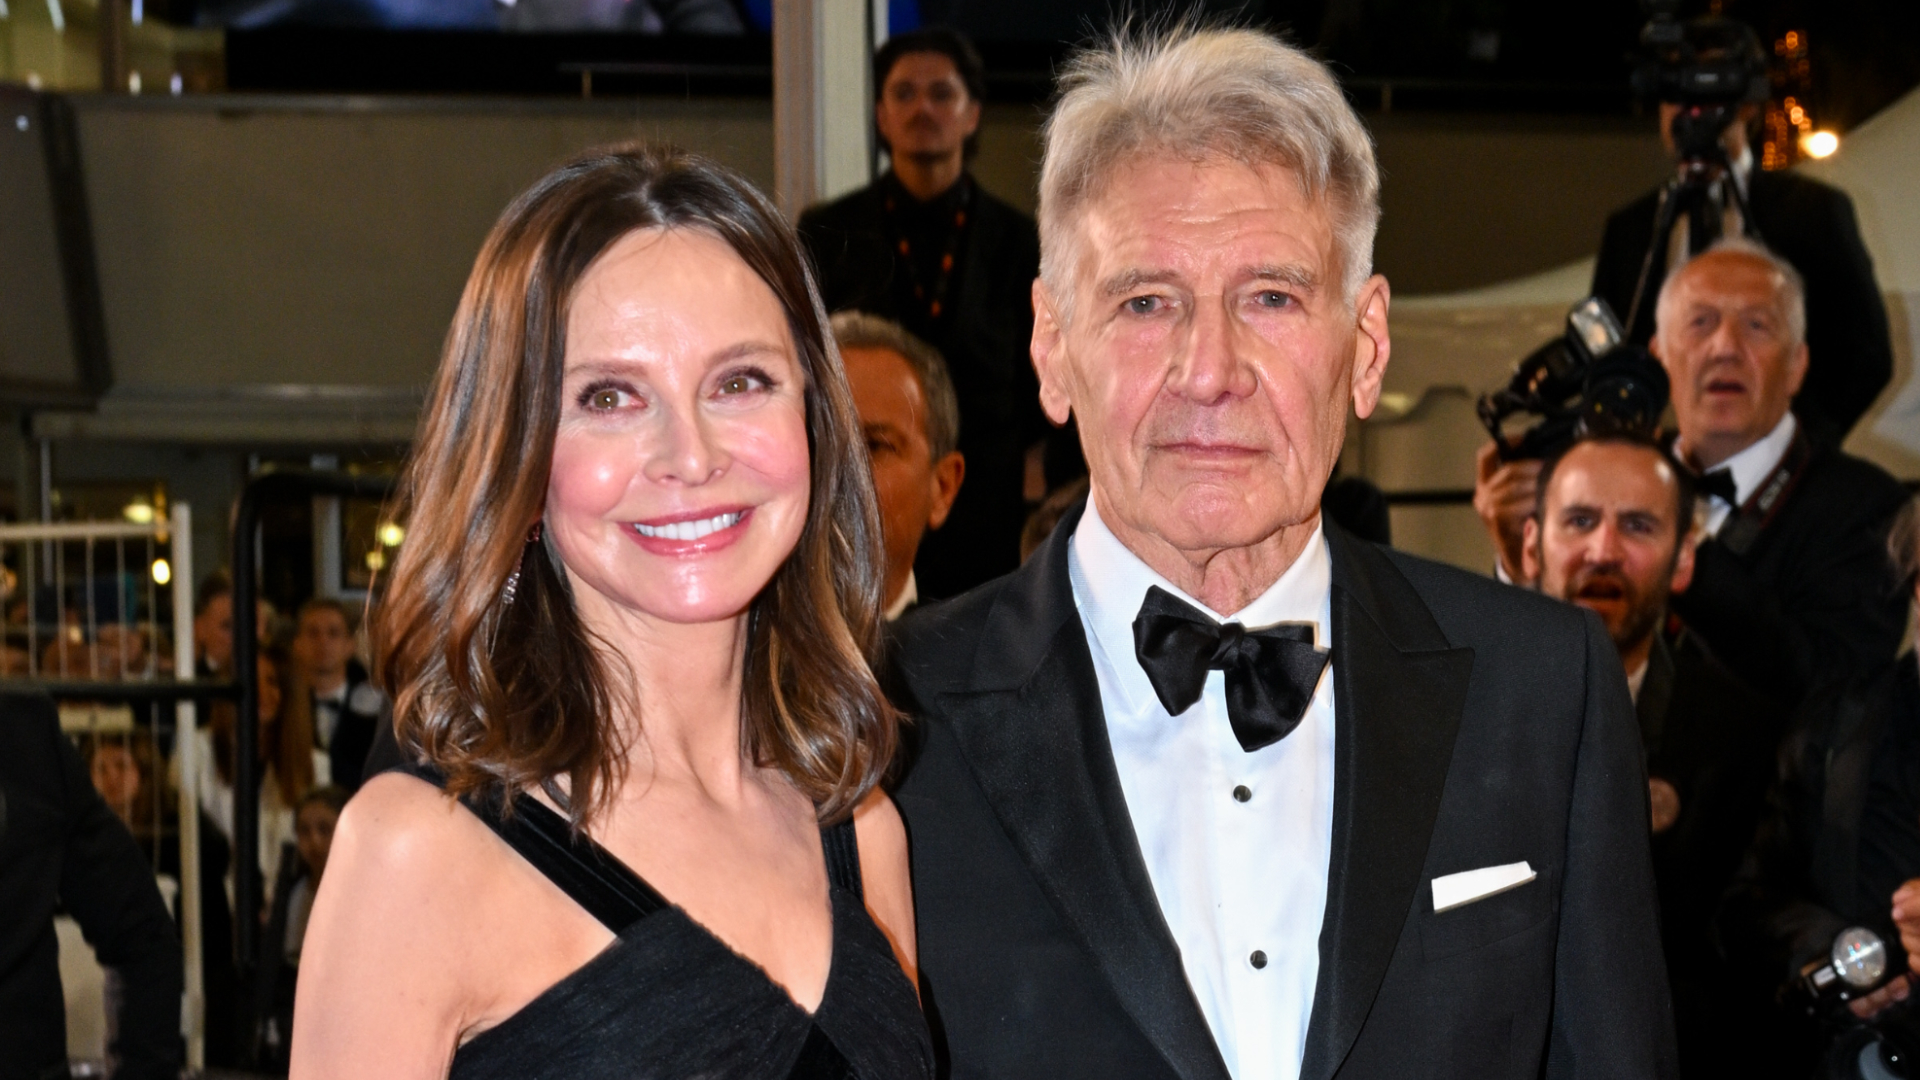 Festival de Cannes comete gafe com esposa de Harrison Ford e momento constrangedor viraliza; assista foto